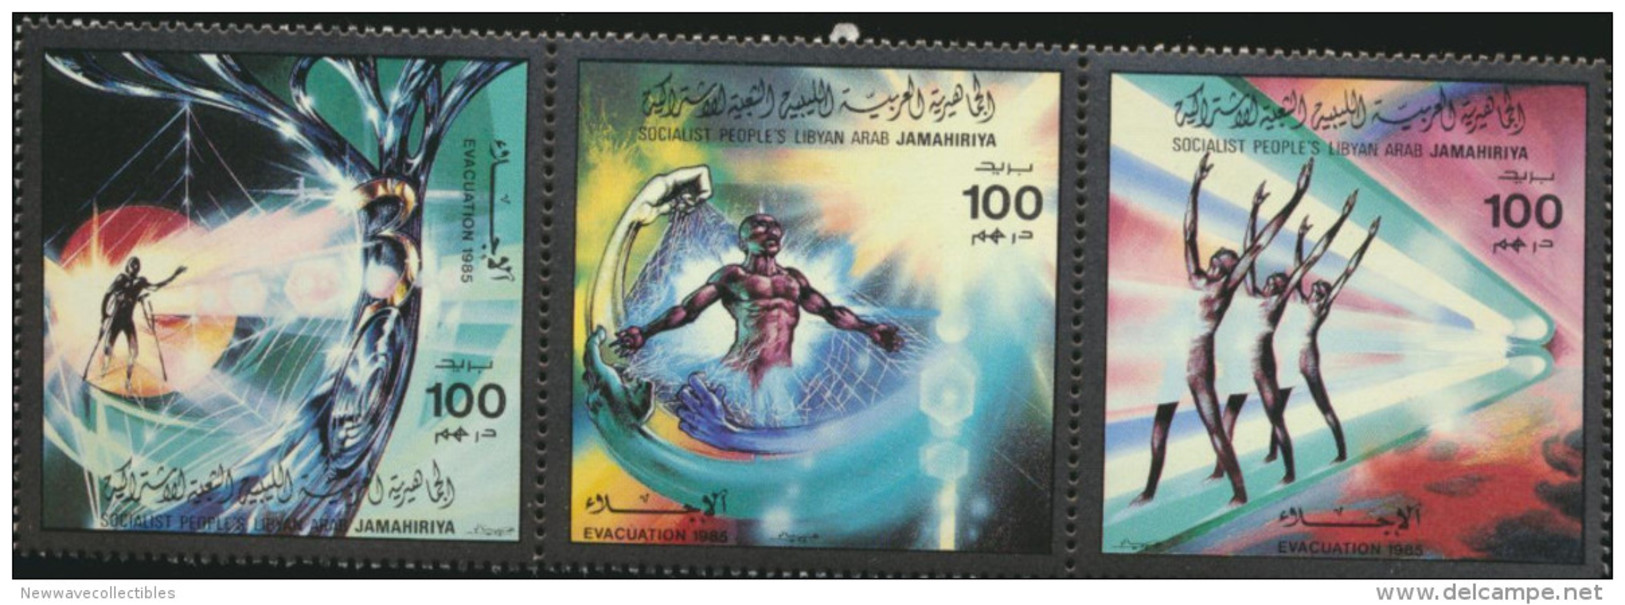 Libya SC.1275- Evacuation, Dance,Complete Set Of 3 Stamps, MNH,Mint - Libya